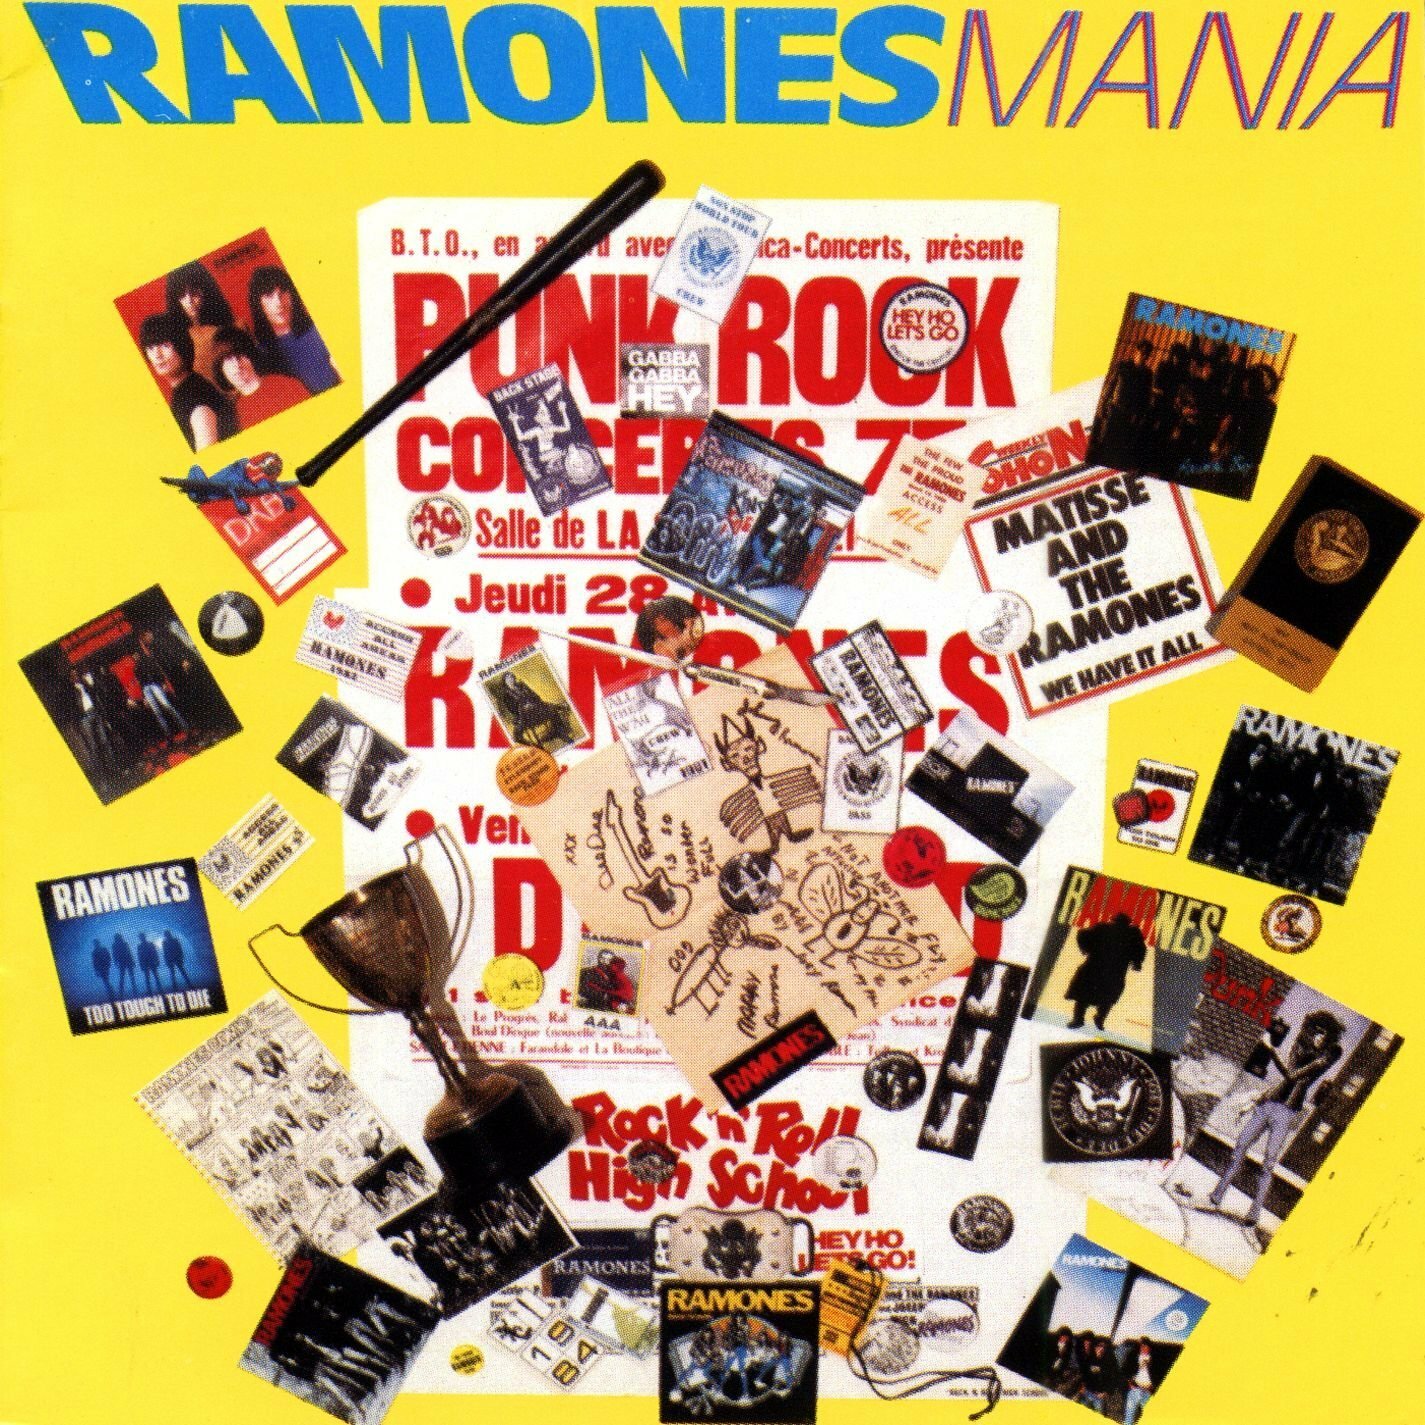 CD - Ramones - Mania (Japan)